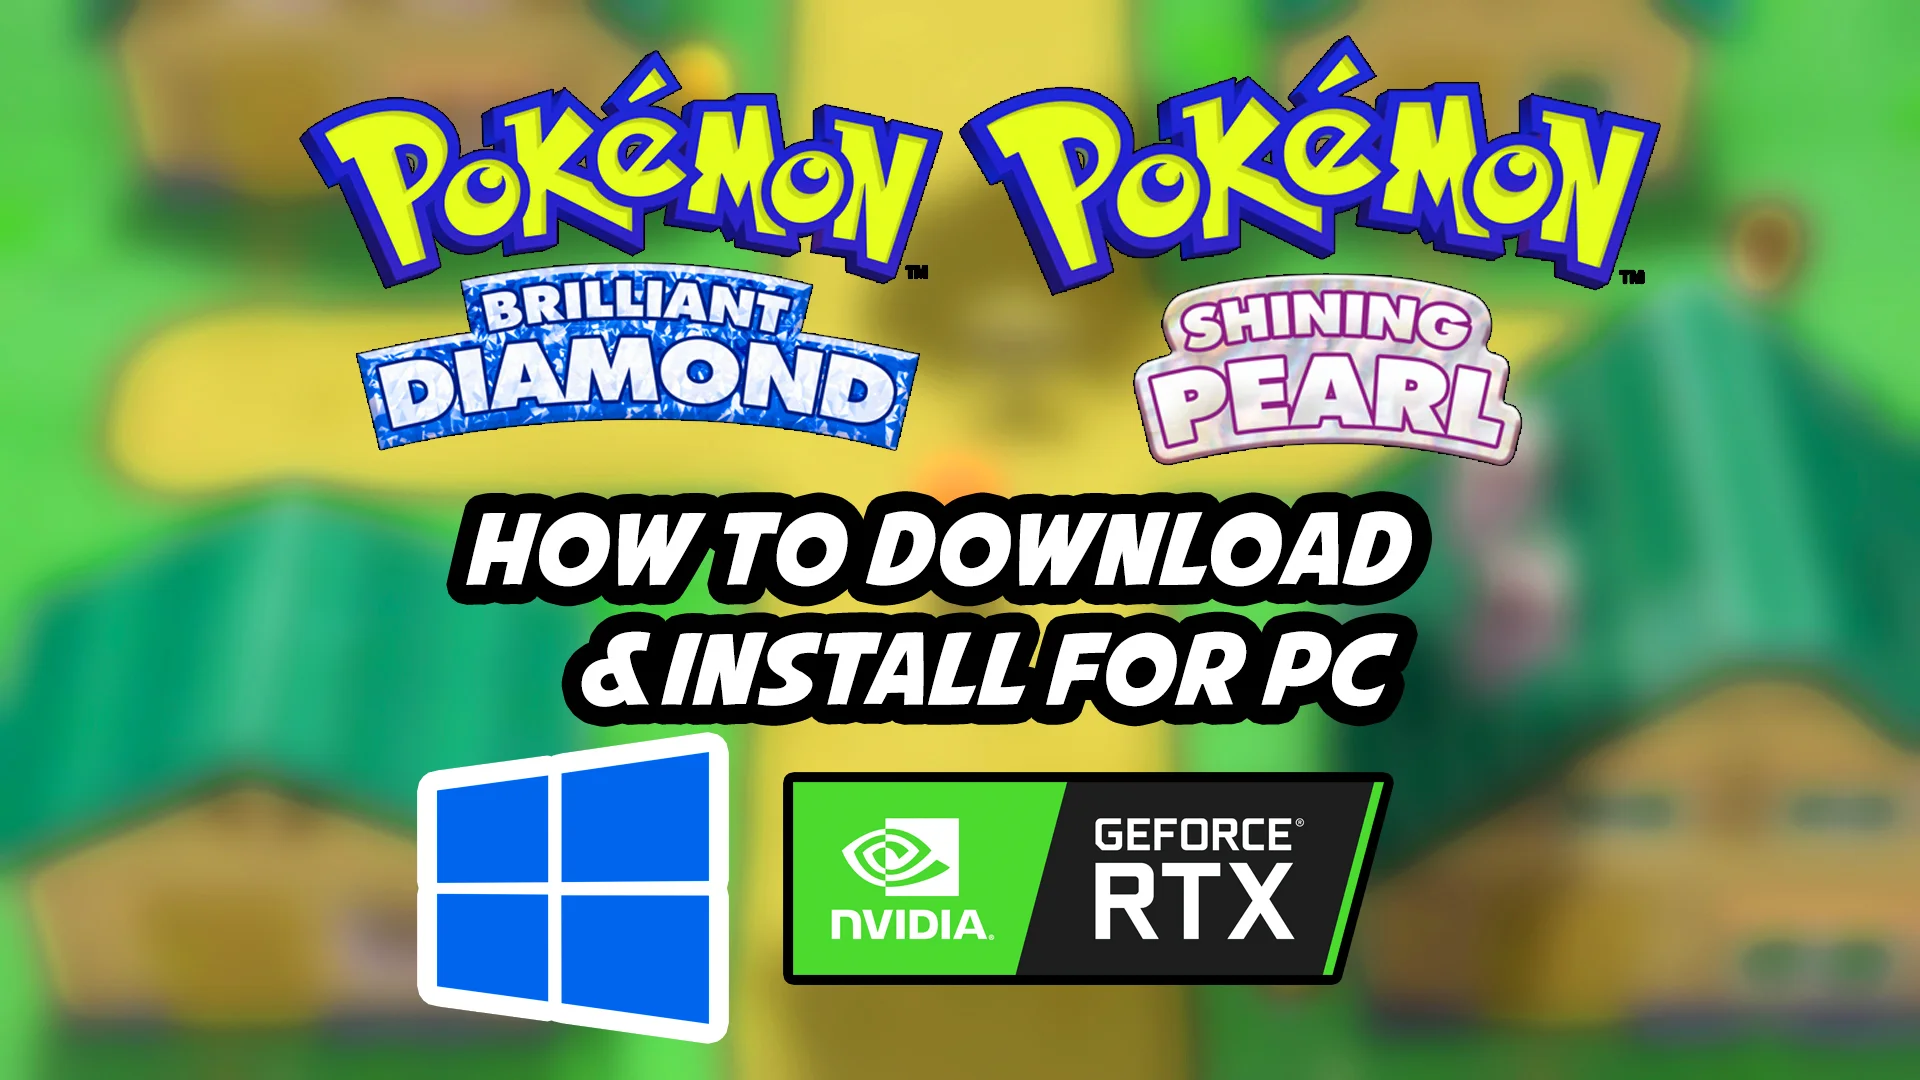 100% Working Pokemon Shining Pearl XCI Rom Download Link NSWitch on Vimeo